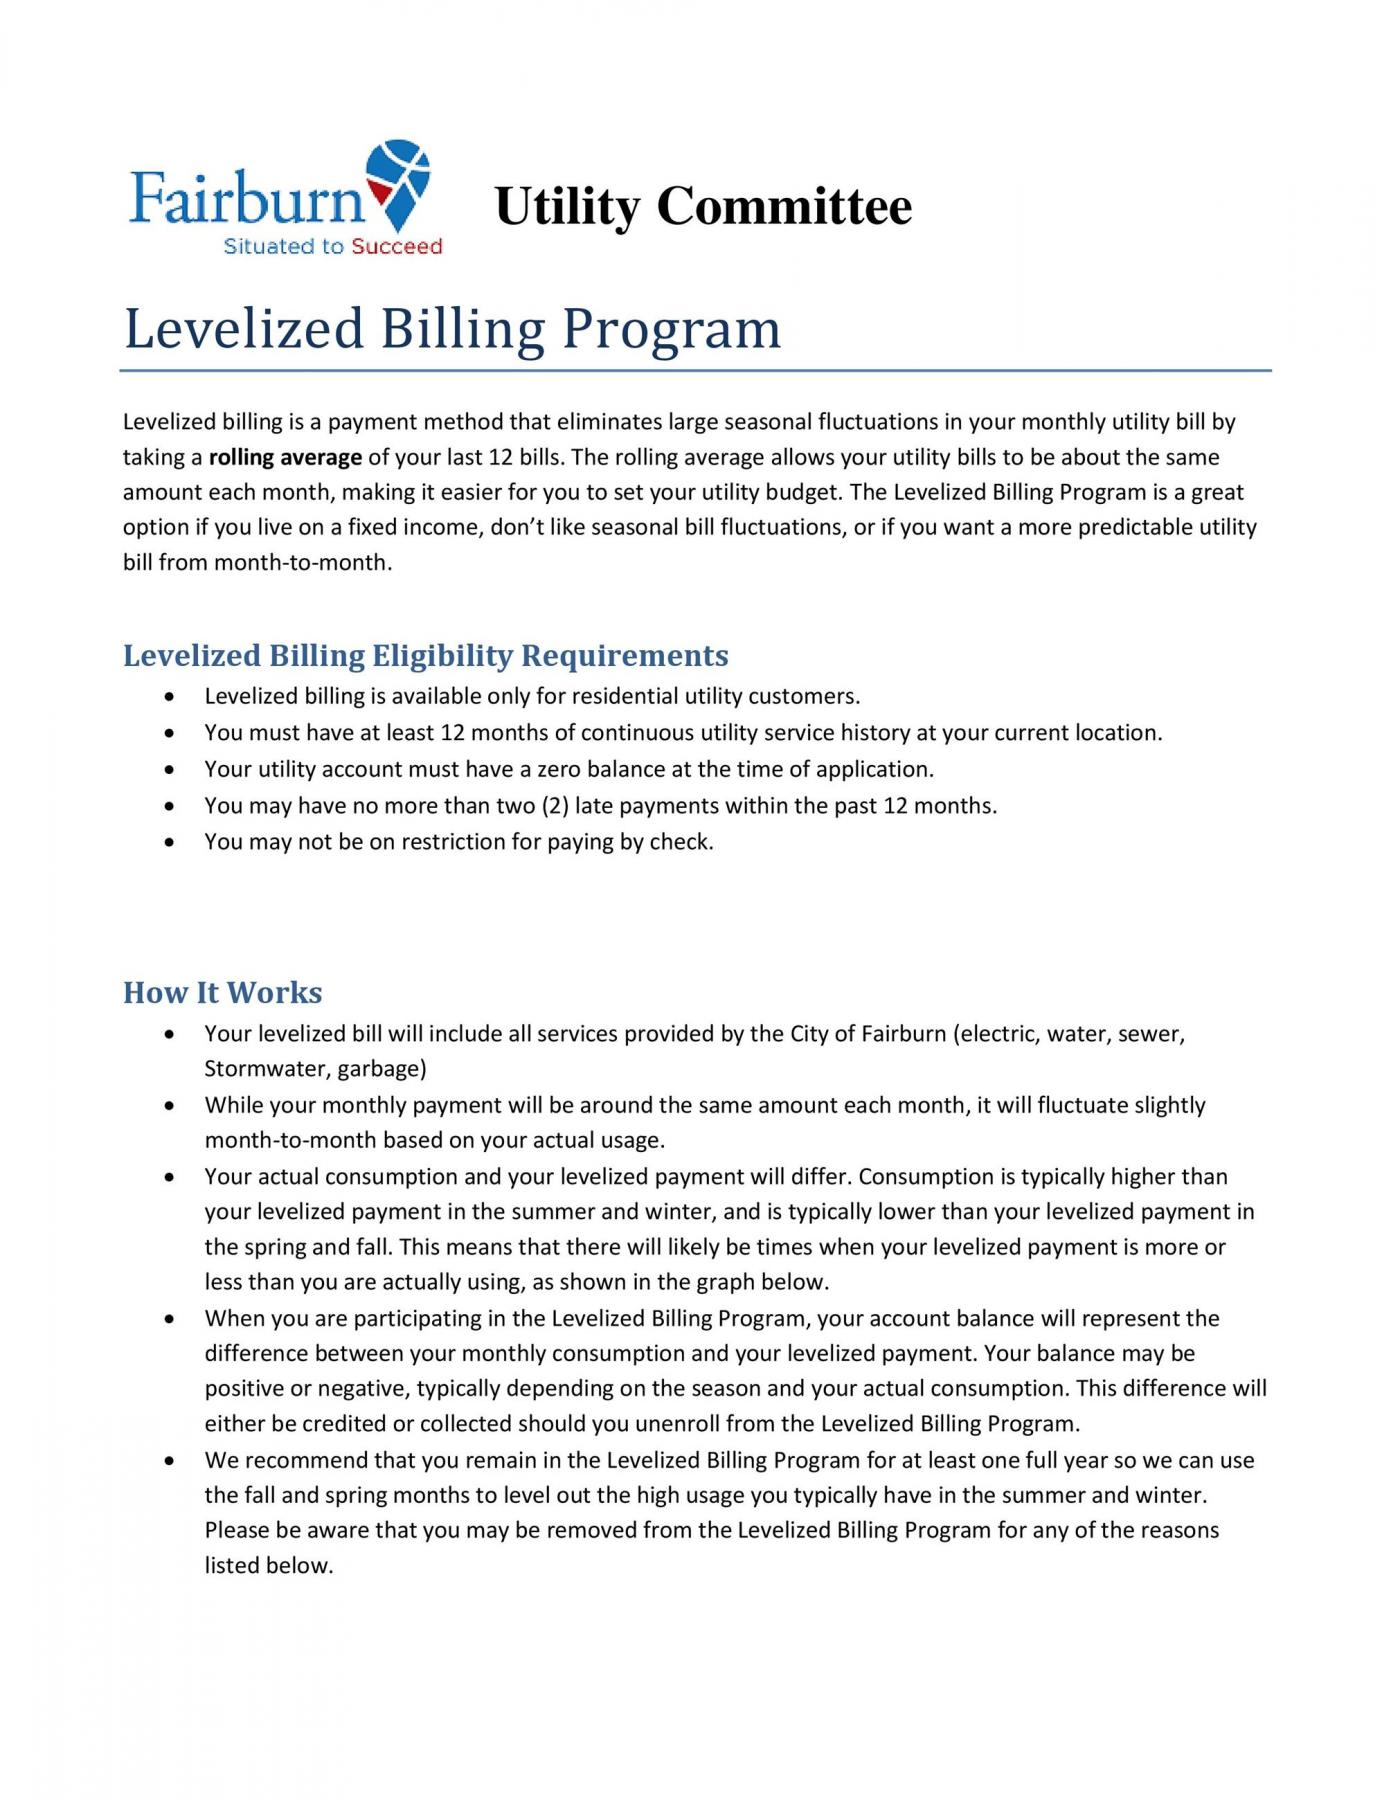 Levelized Billing Program